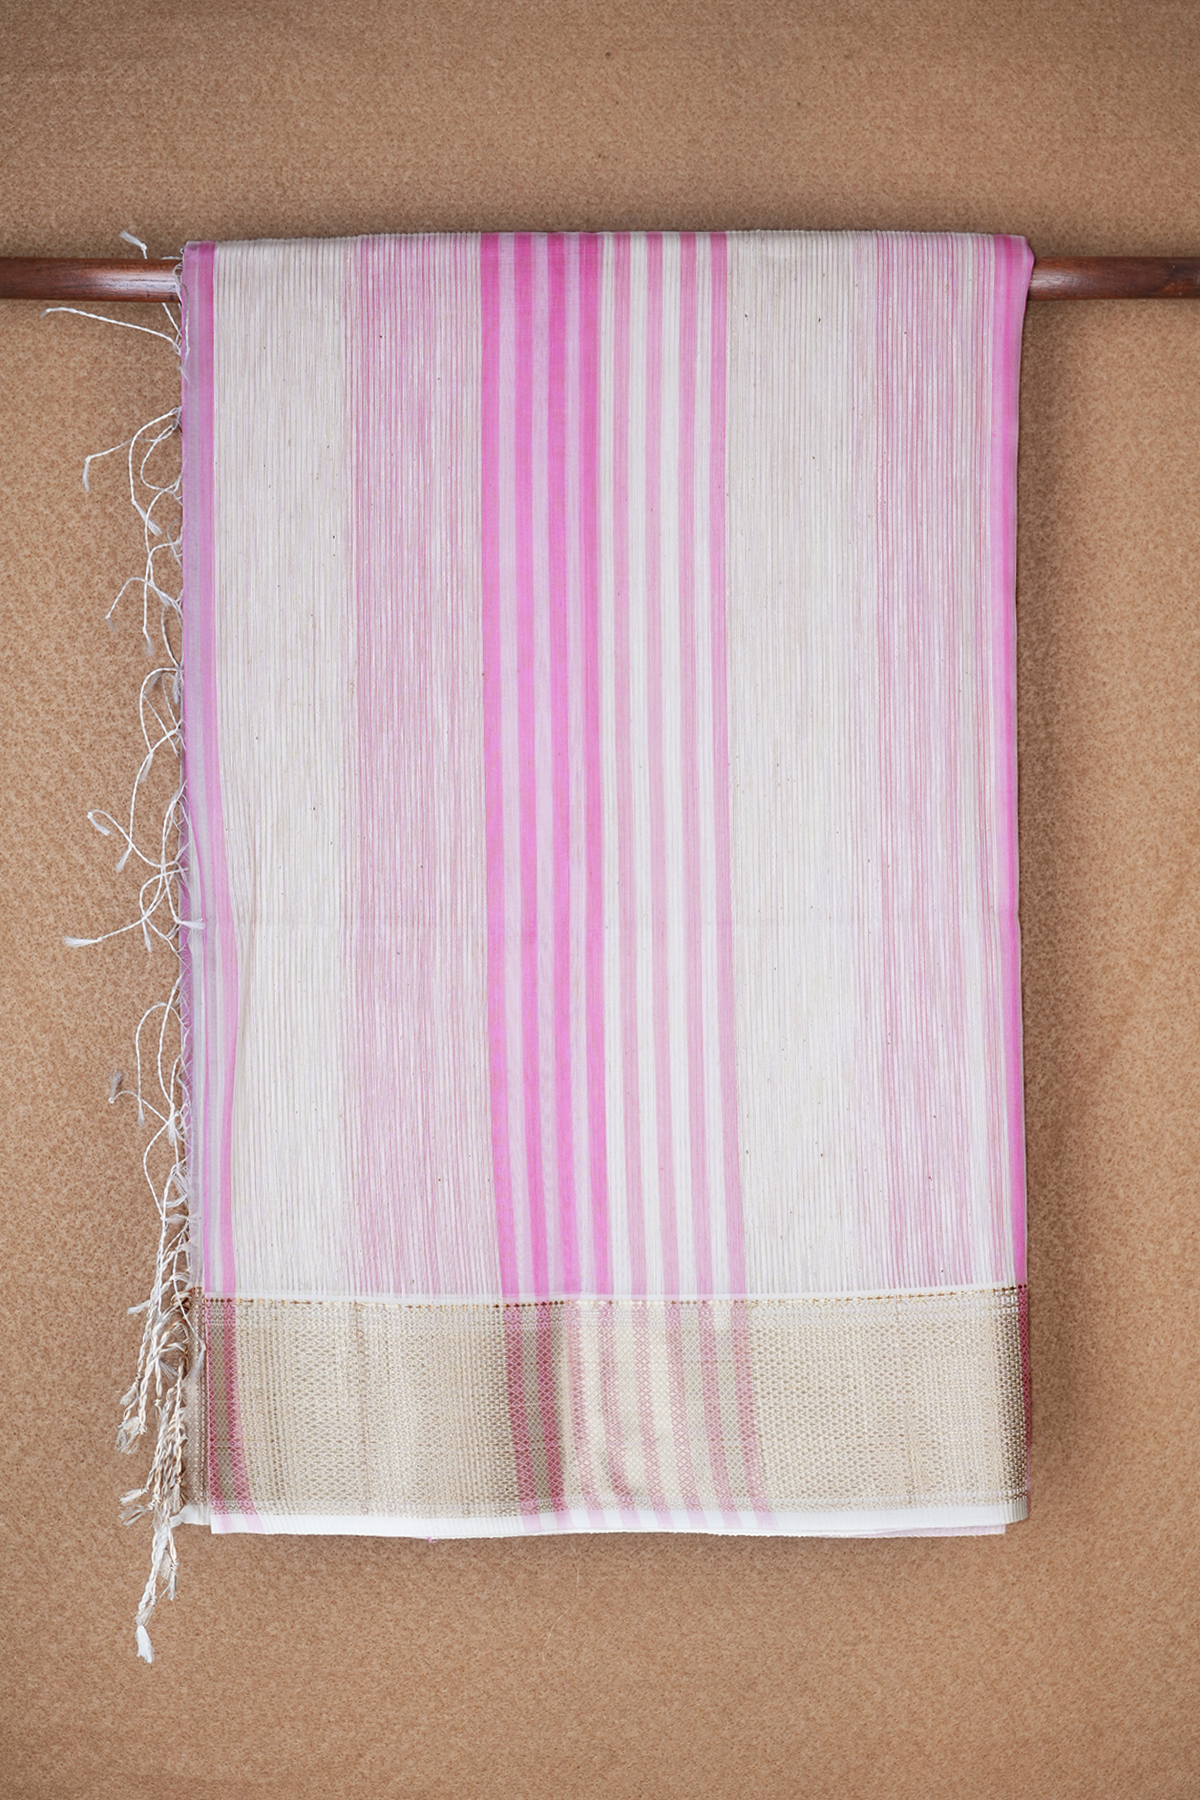 Self Stripes Pink And White Maheswari Silk Cotton Saree